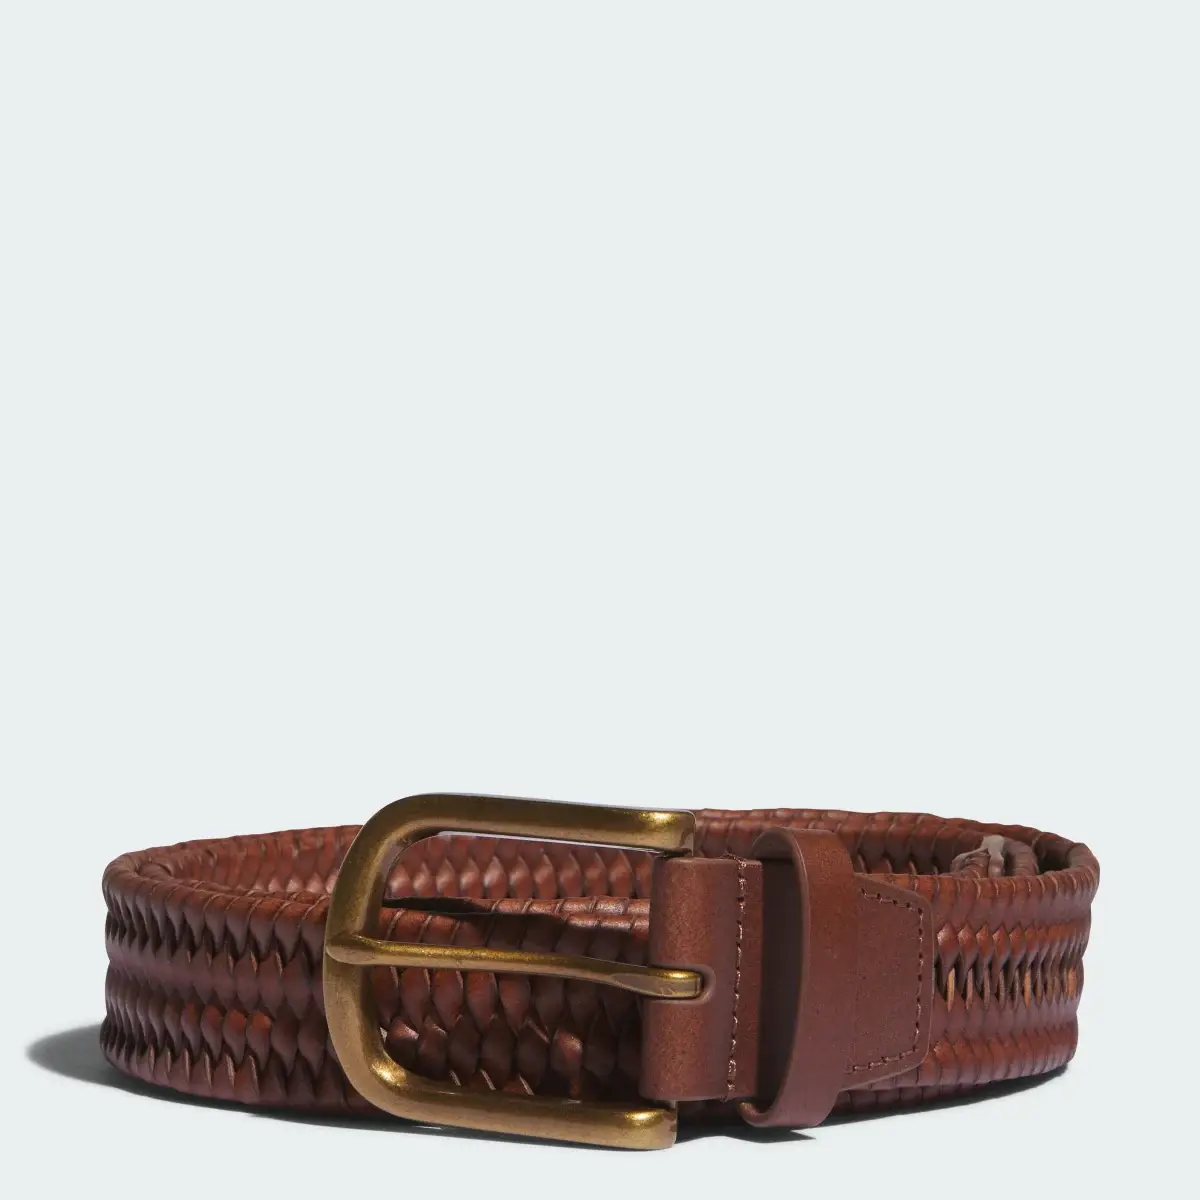 Adidas Golf Woven Leather Belt. 1